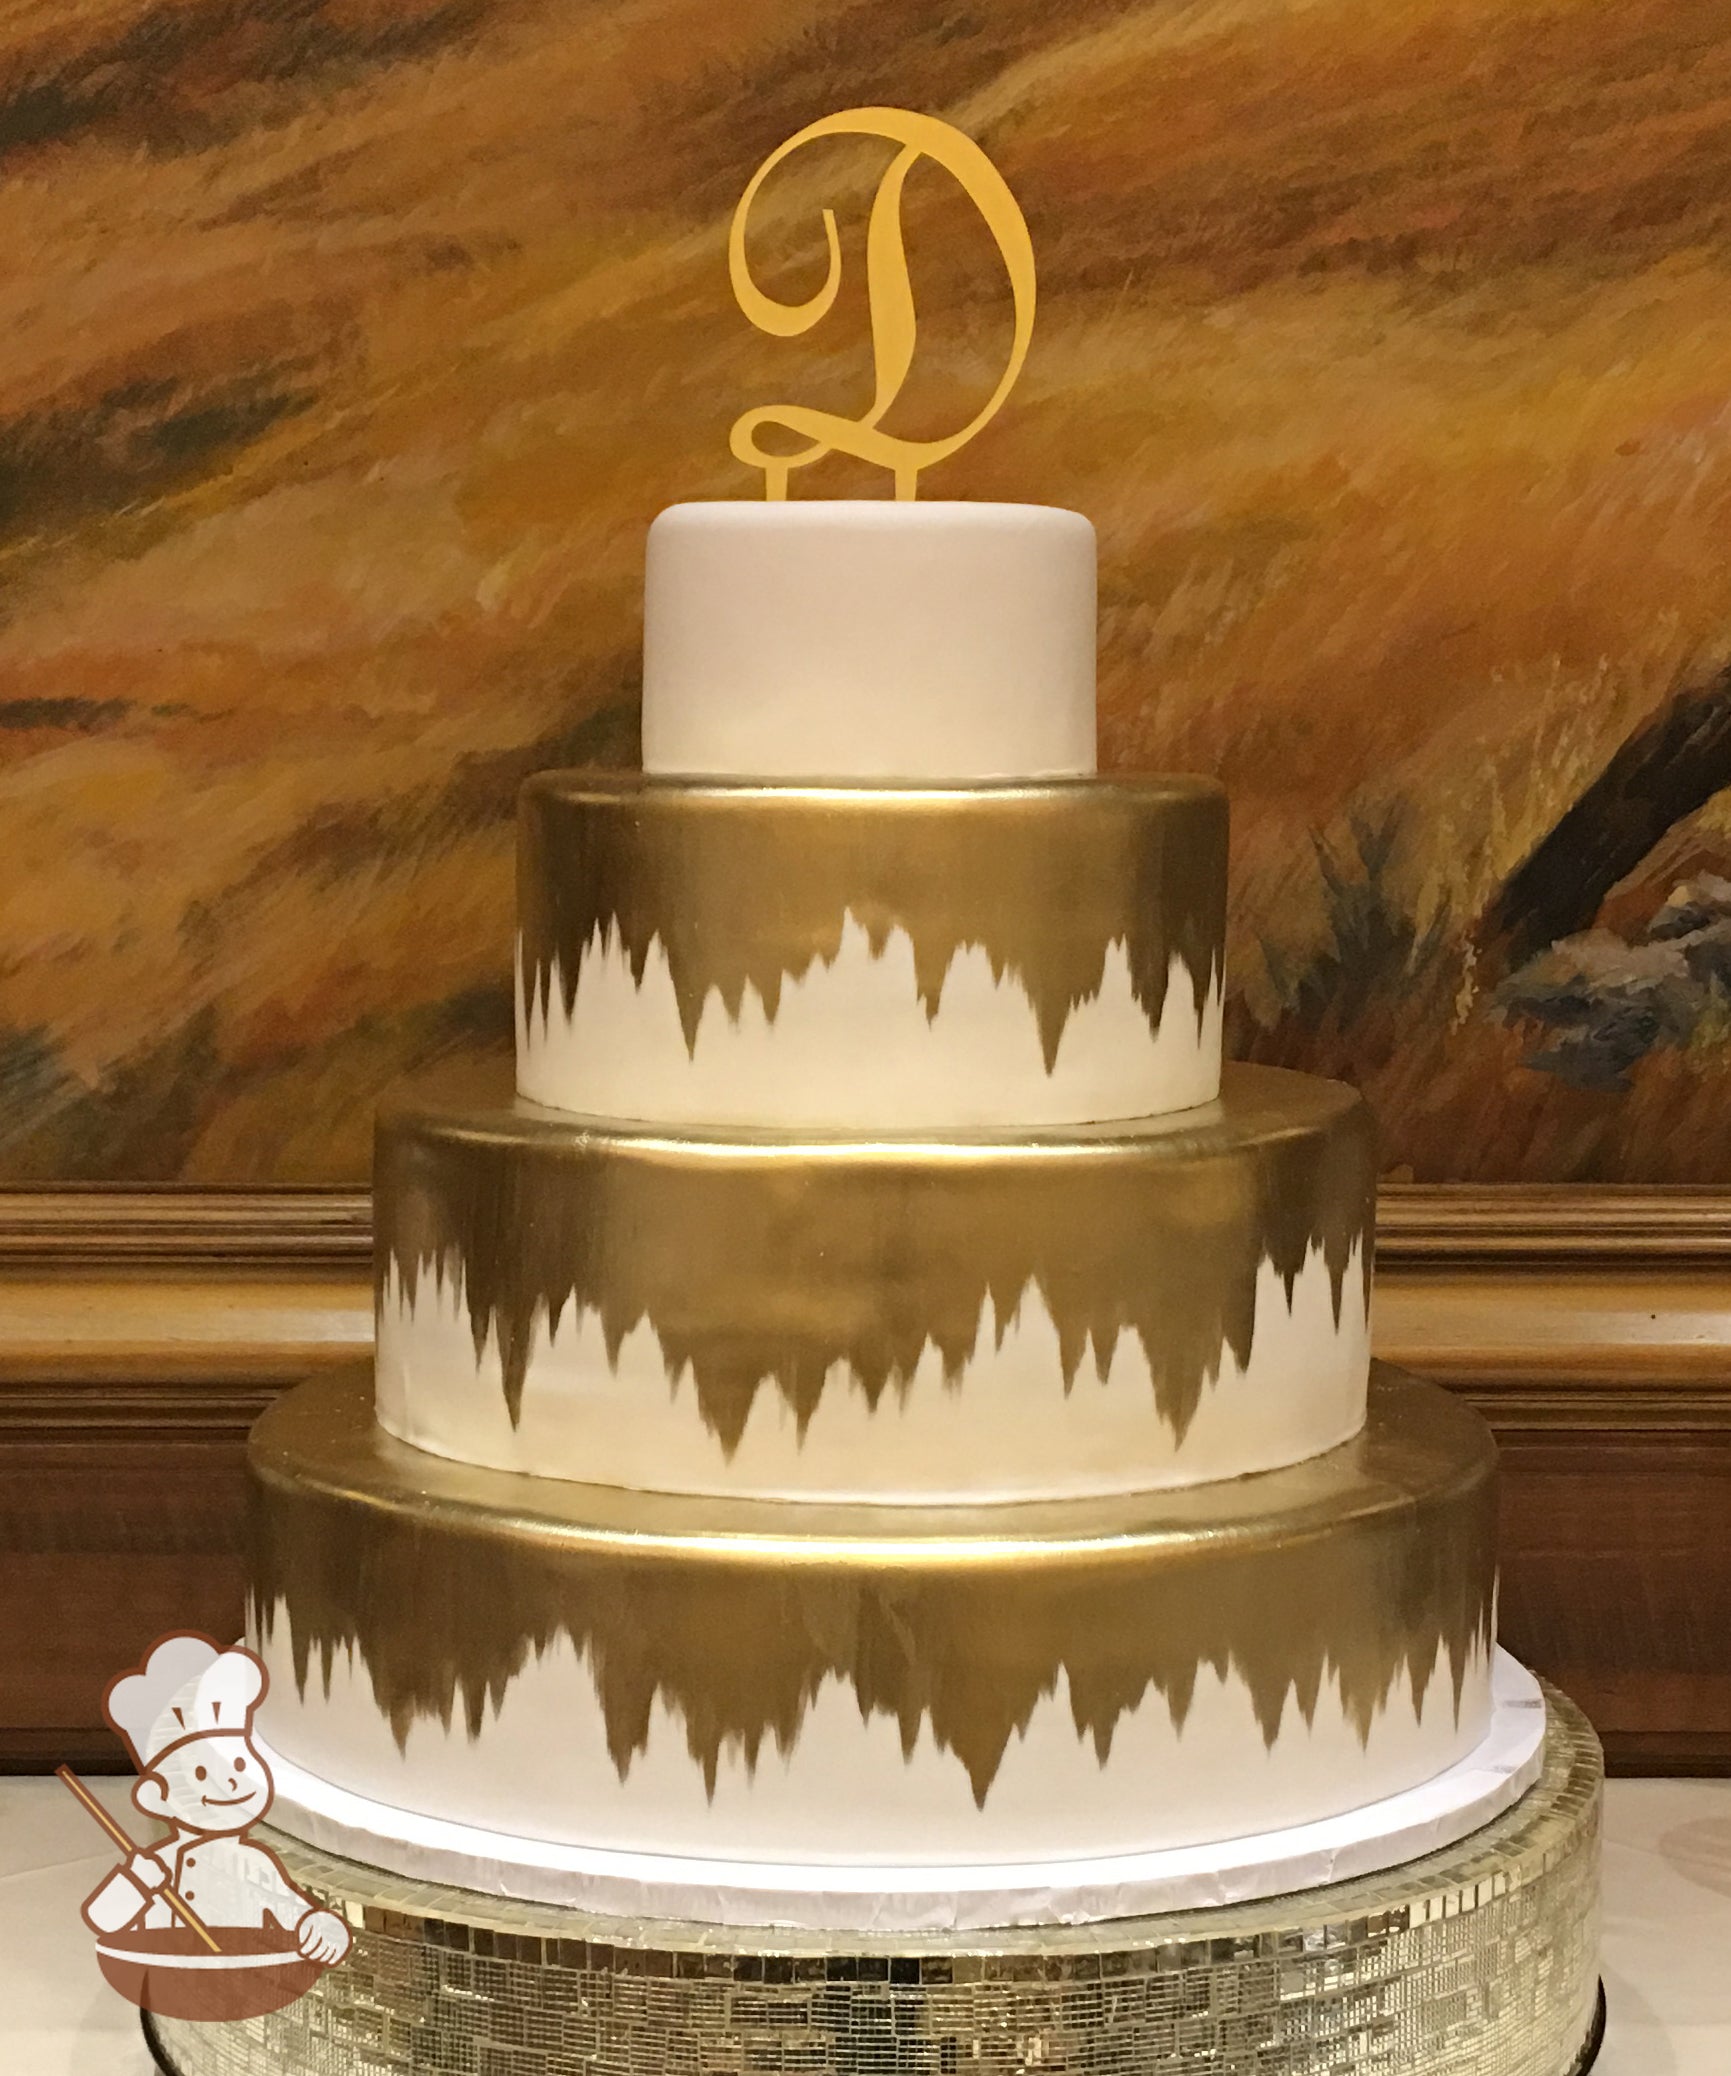 4 tier fondant wedding cake with gold design.